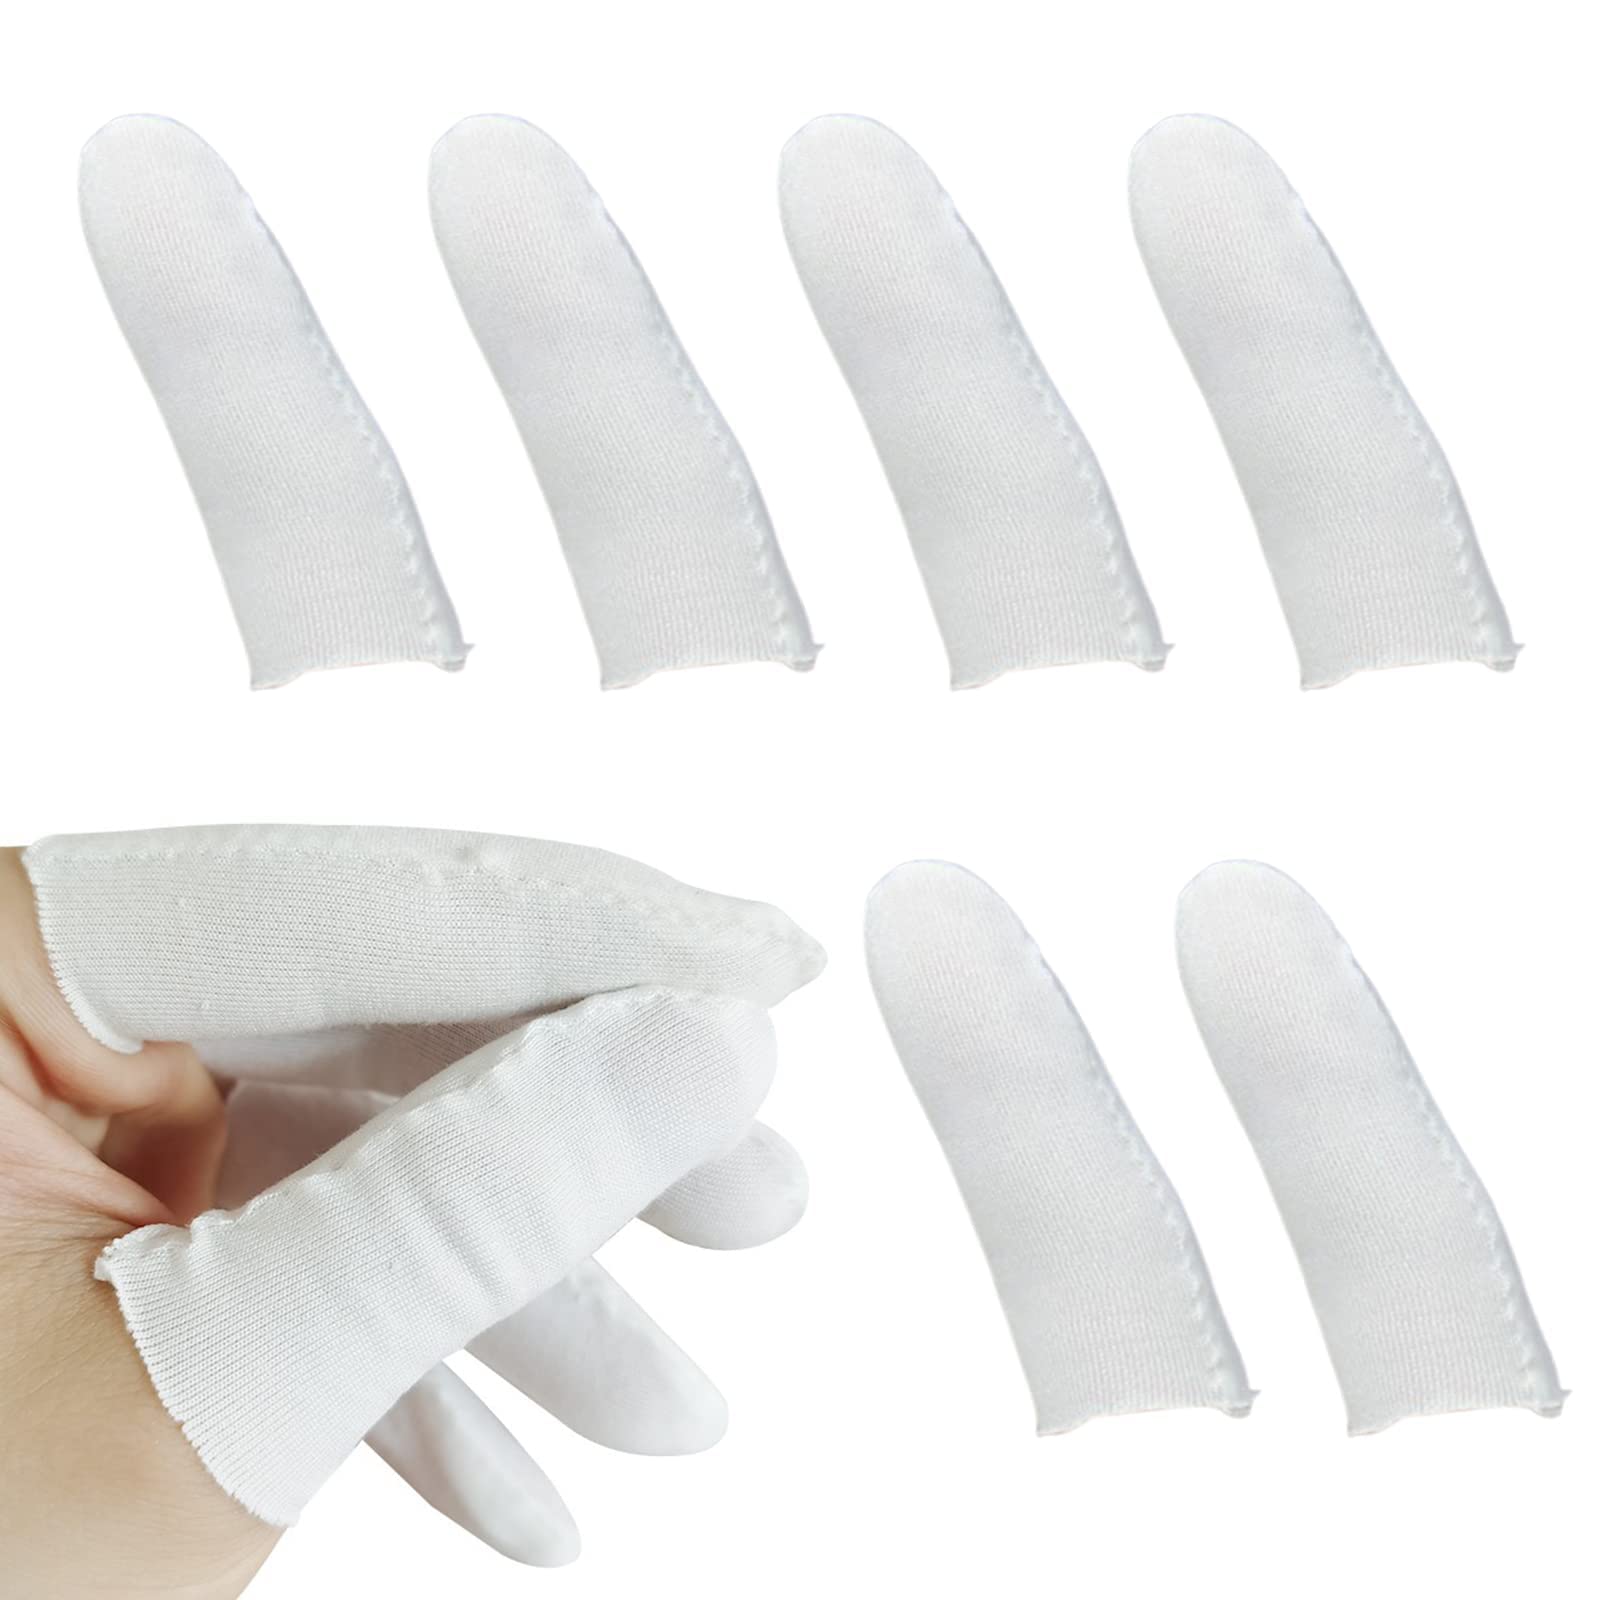 LIKENNY 布指カバー 使い捨て 200枚セット コットン 手湿疹 白 指サック 綿製 薄手 指先保護 伸縮性 通気性 汗止め 指先ケア 実験 作業用 ホワイト